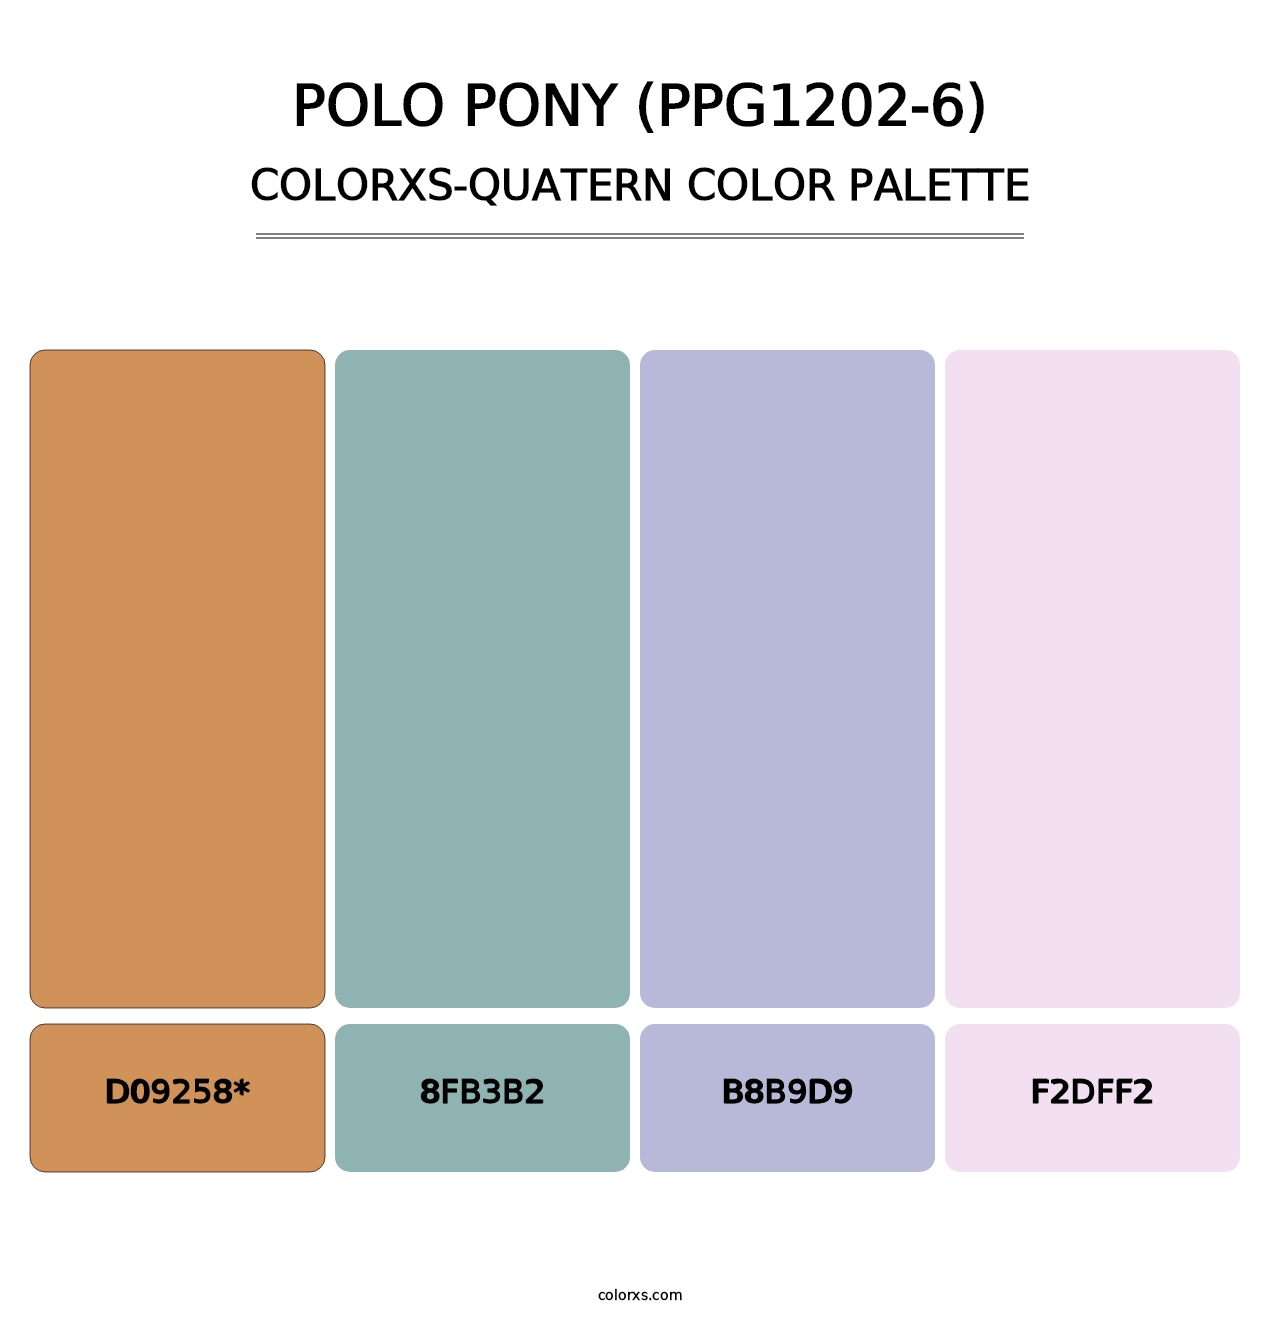 Polo Pony (PPG1202-6) - Colorxs Quatern Palette